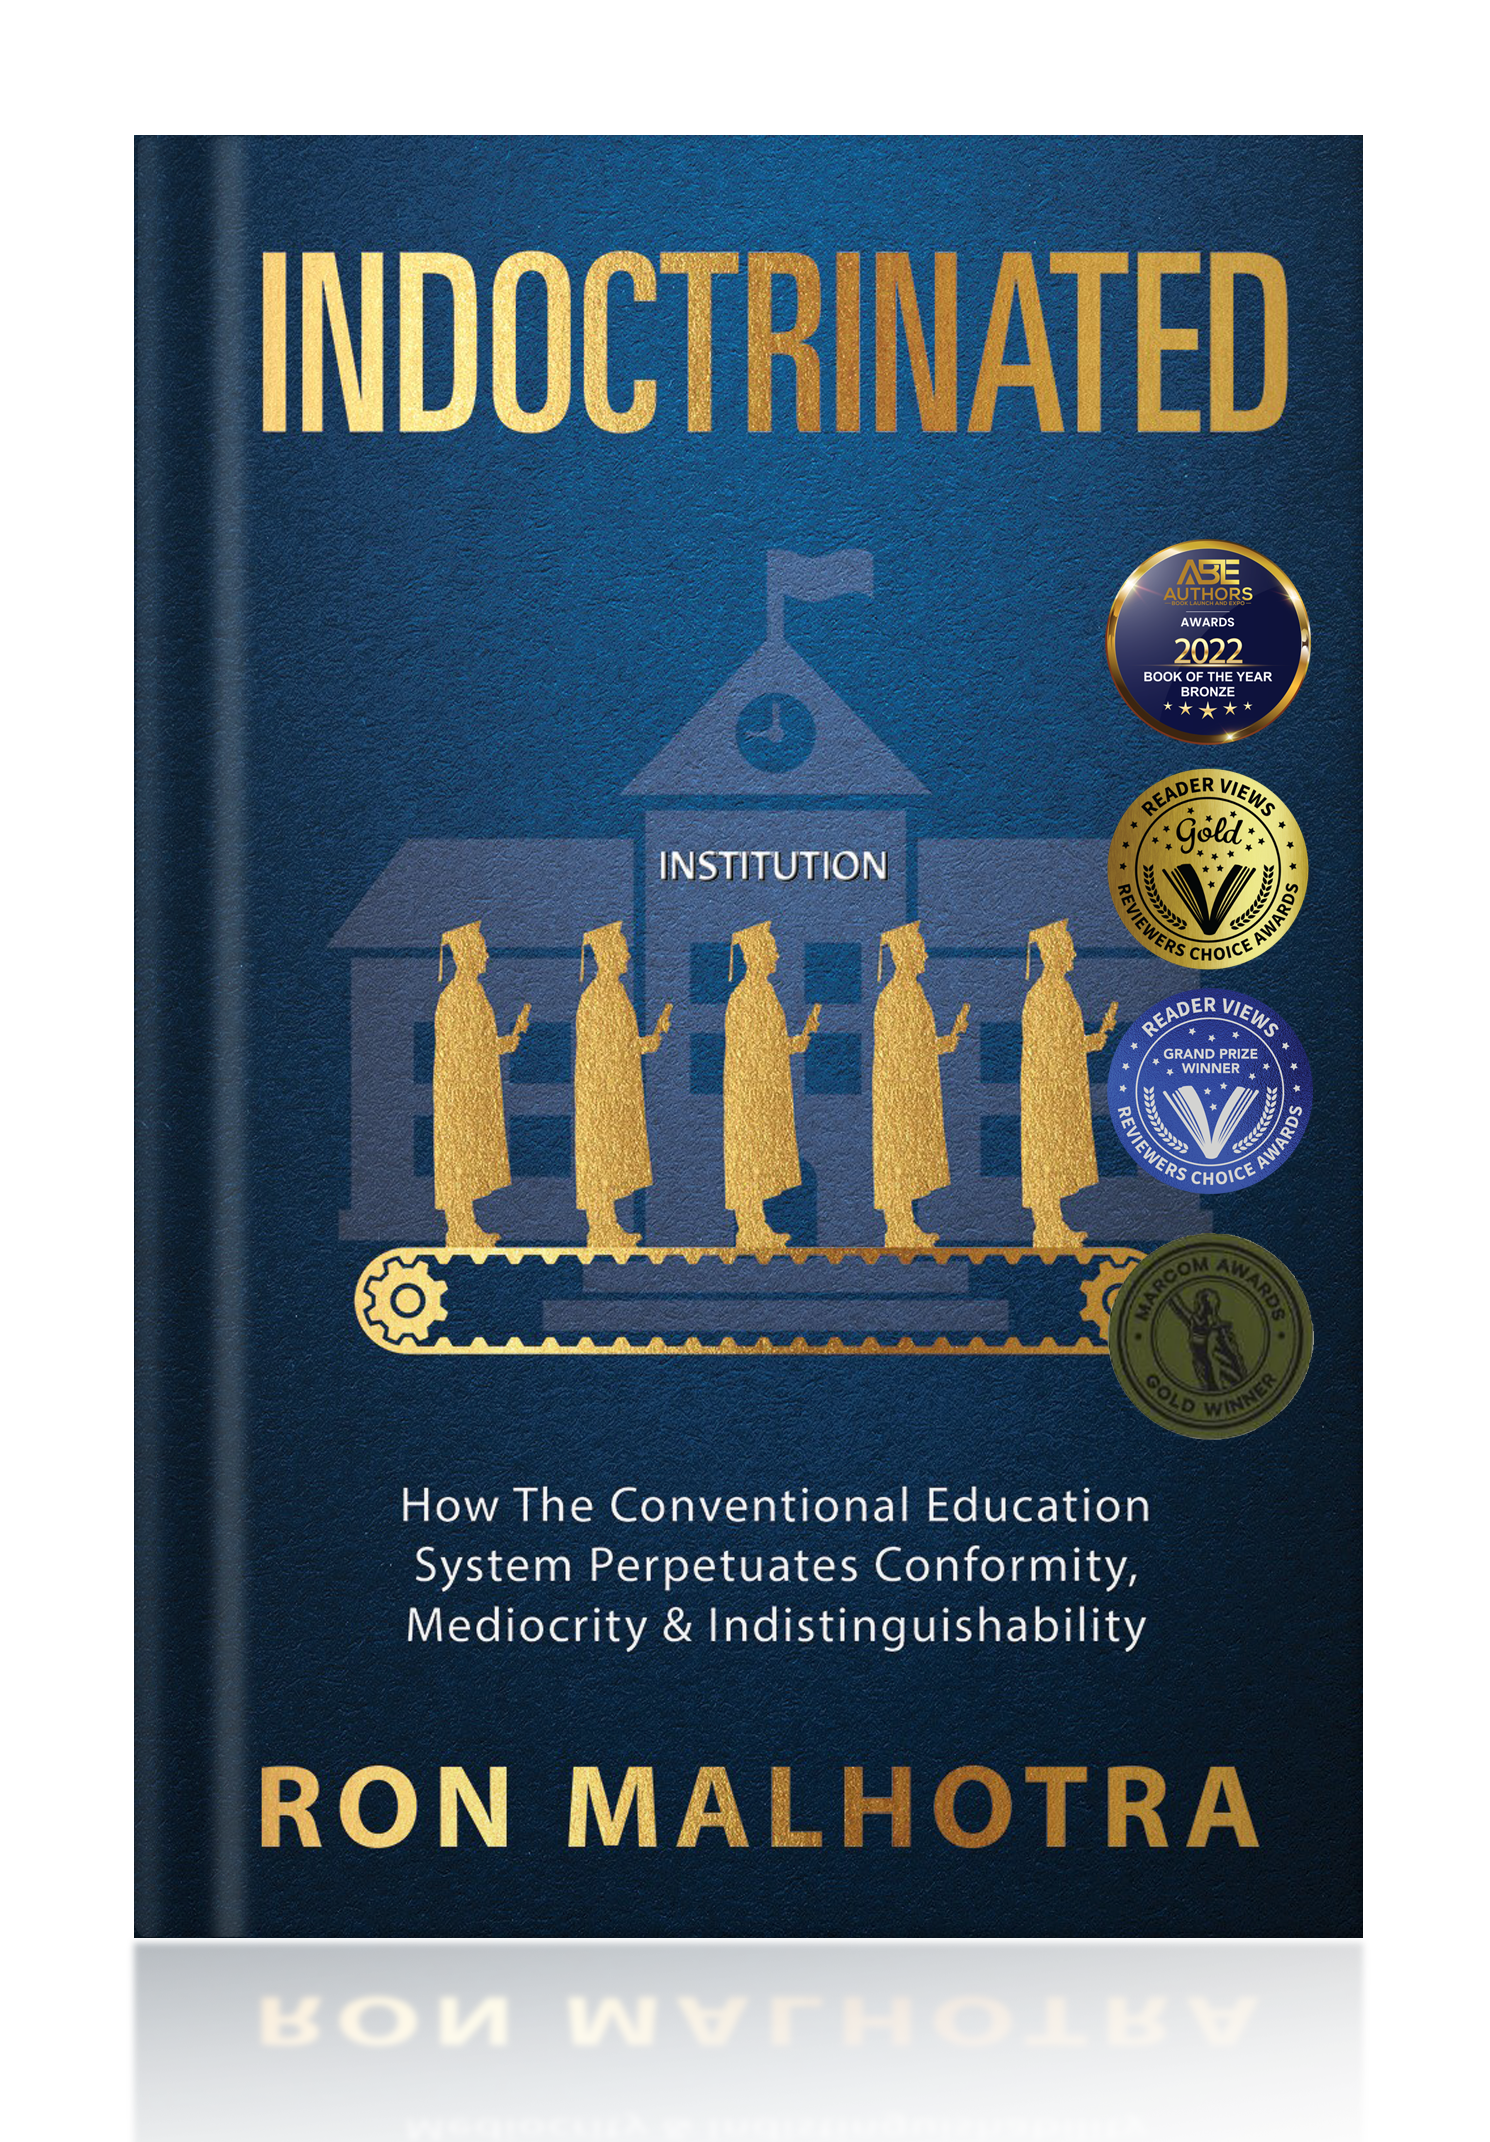 INDOCTRINATED, Ron Malhotra's Best Selling Books,